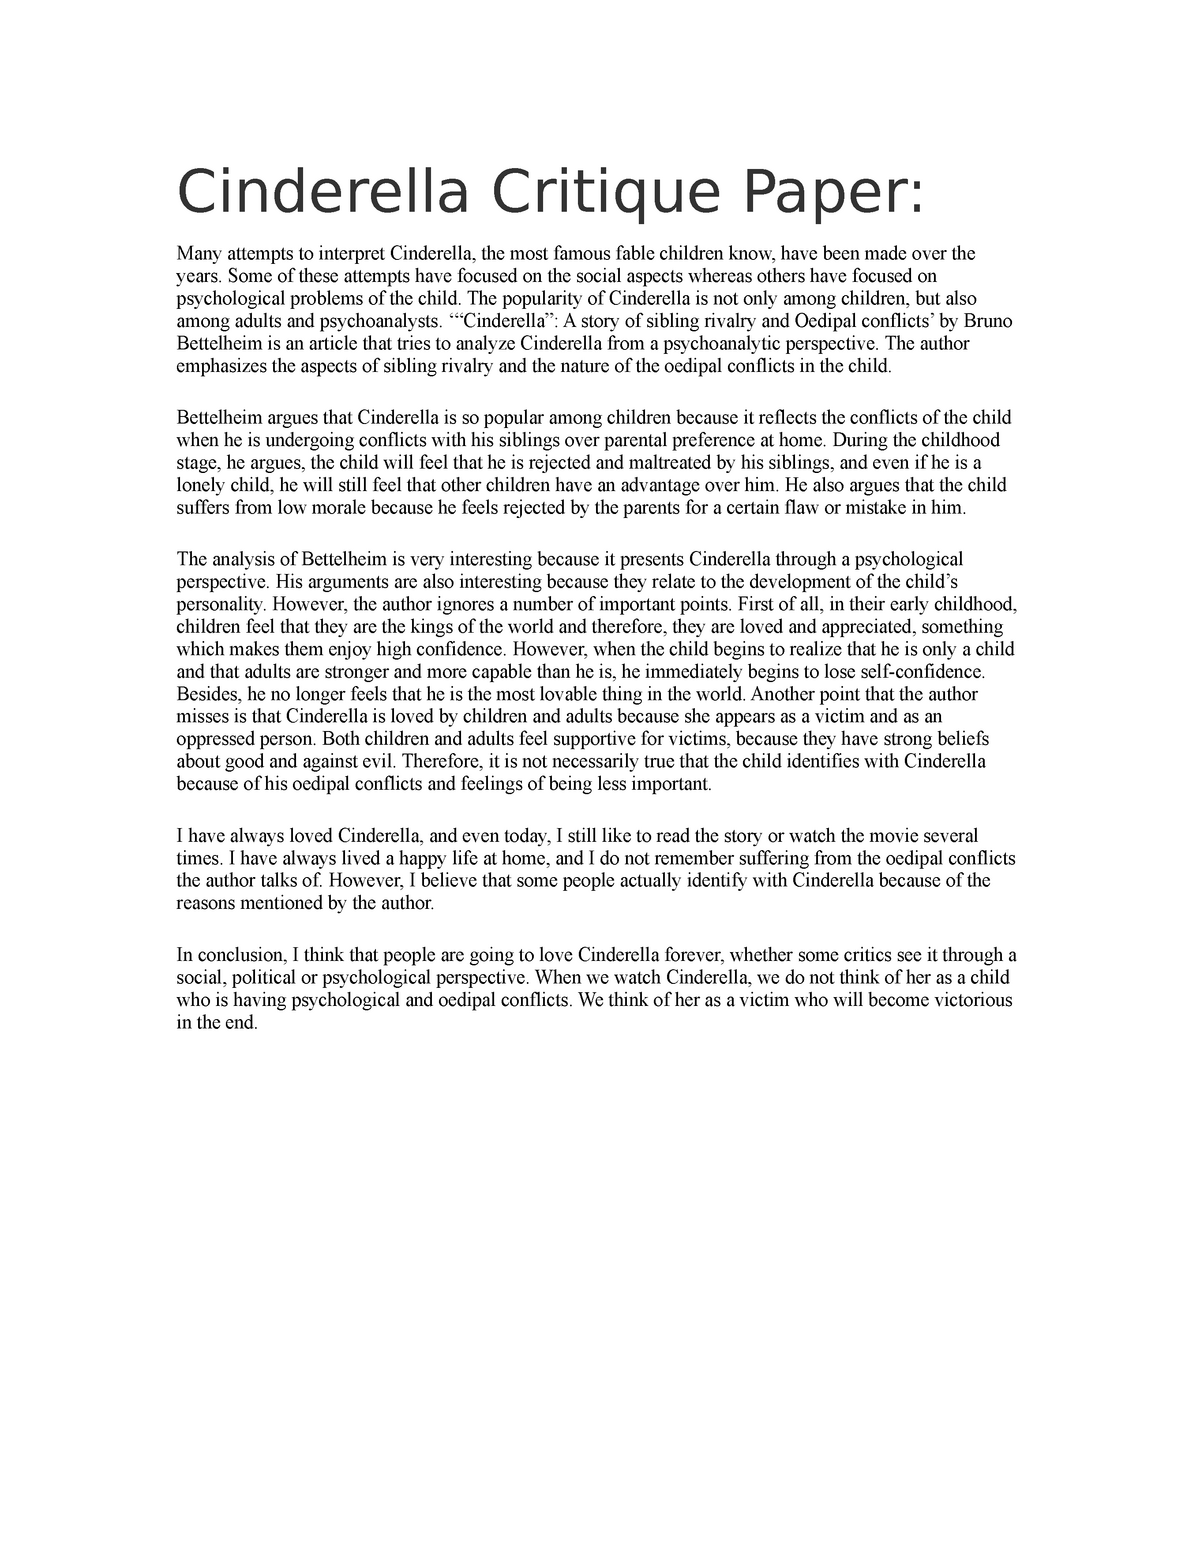 modern cinderella story essay